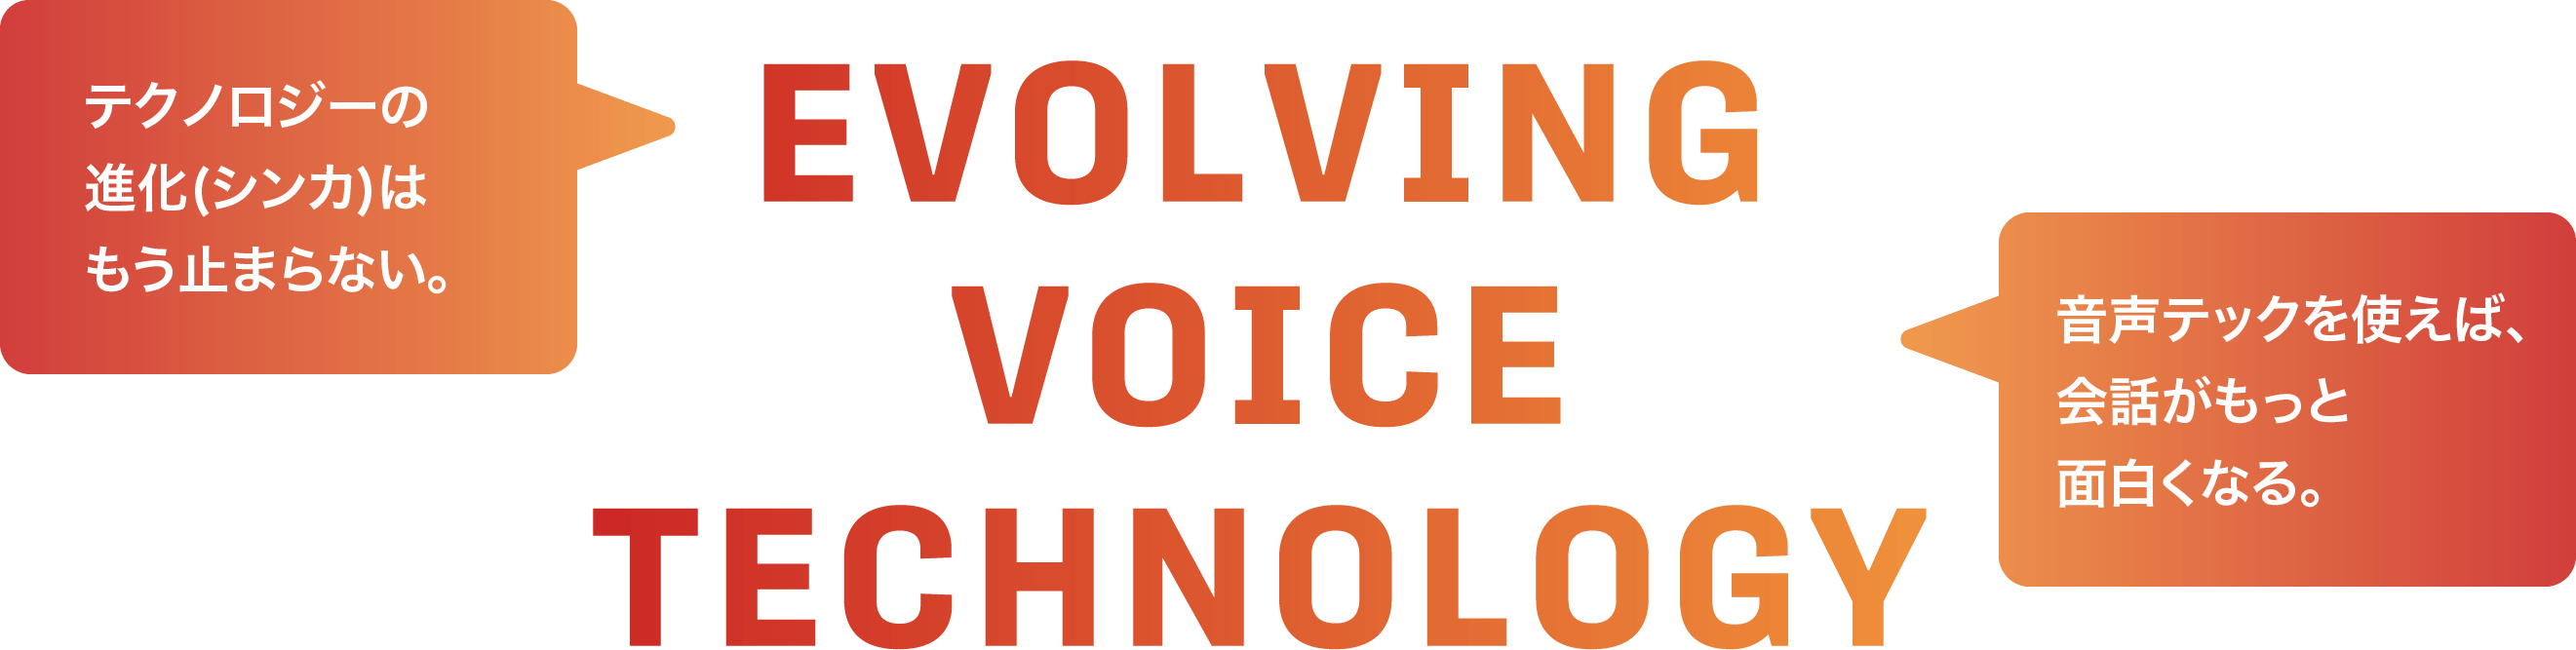 EVOLVING VOICE TECHNOLOGY